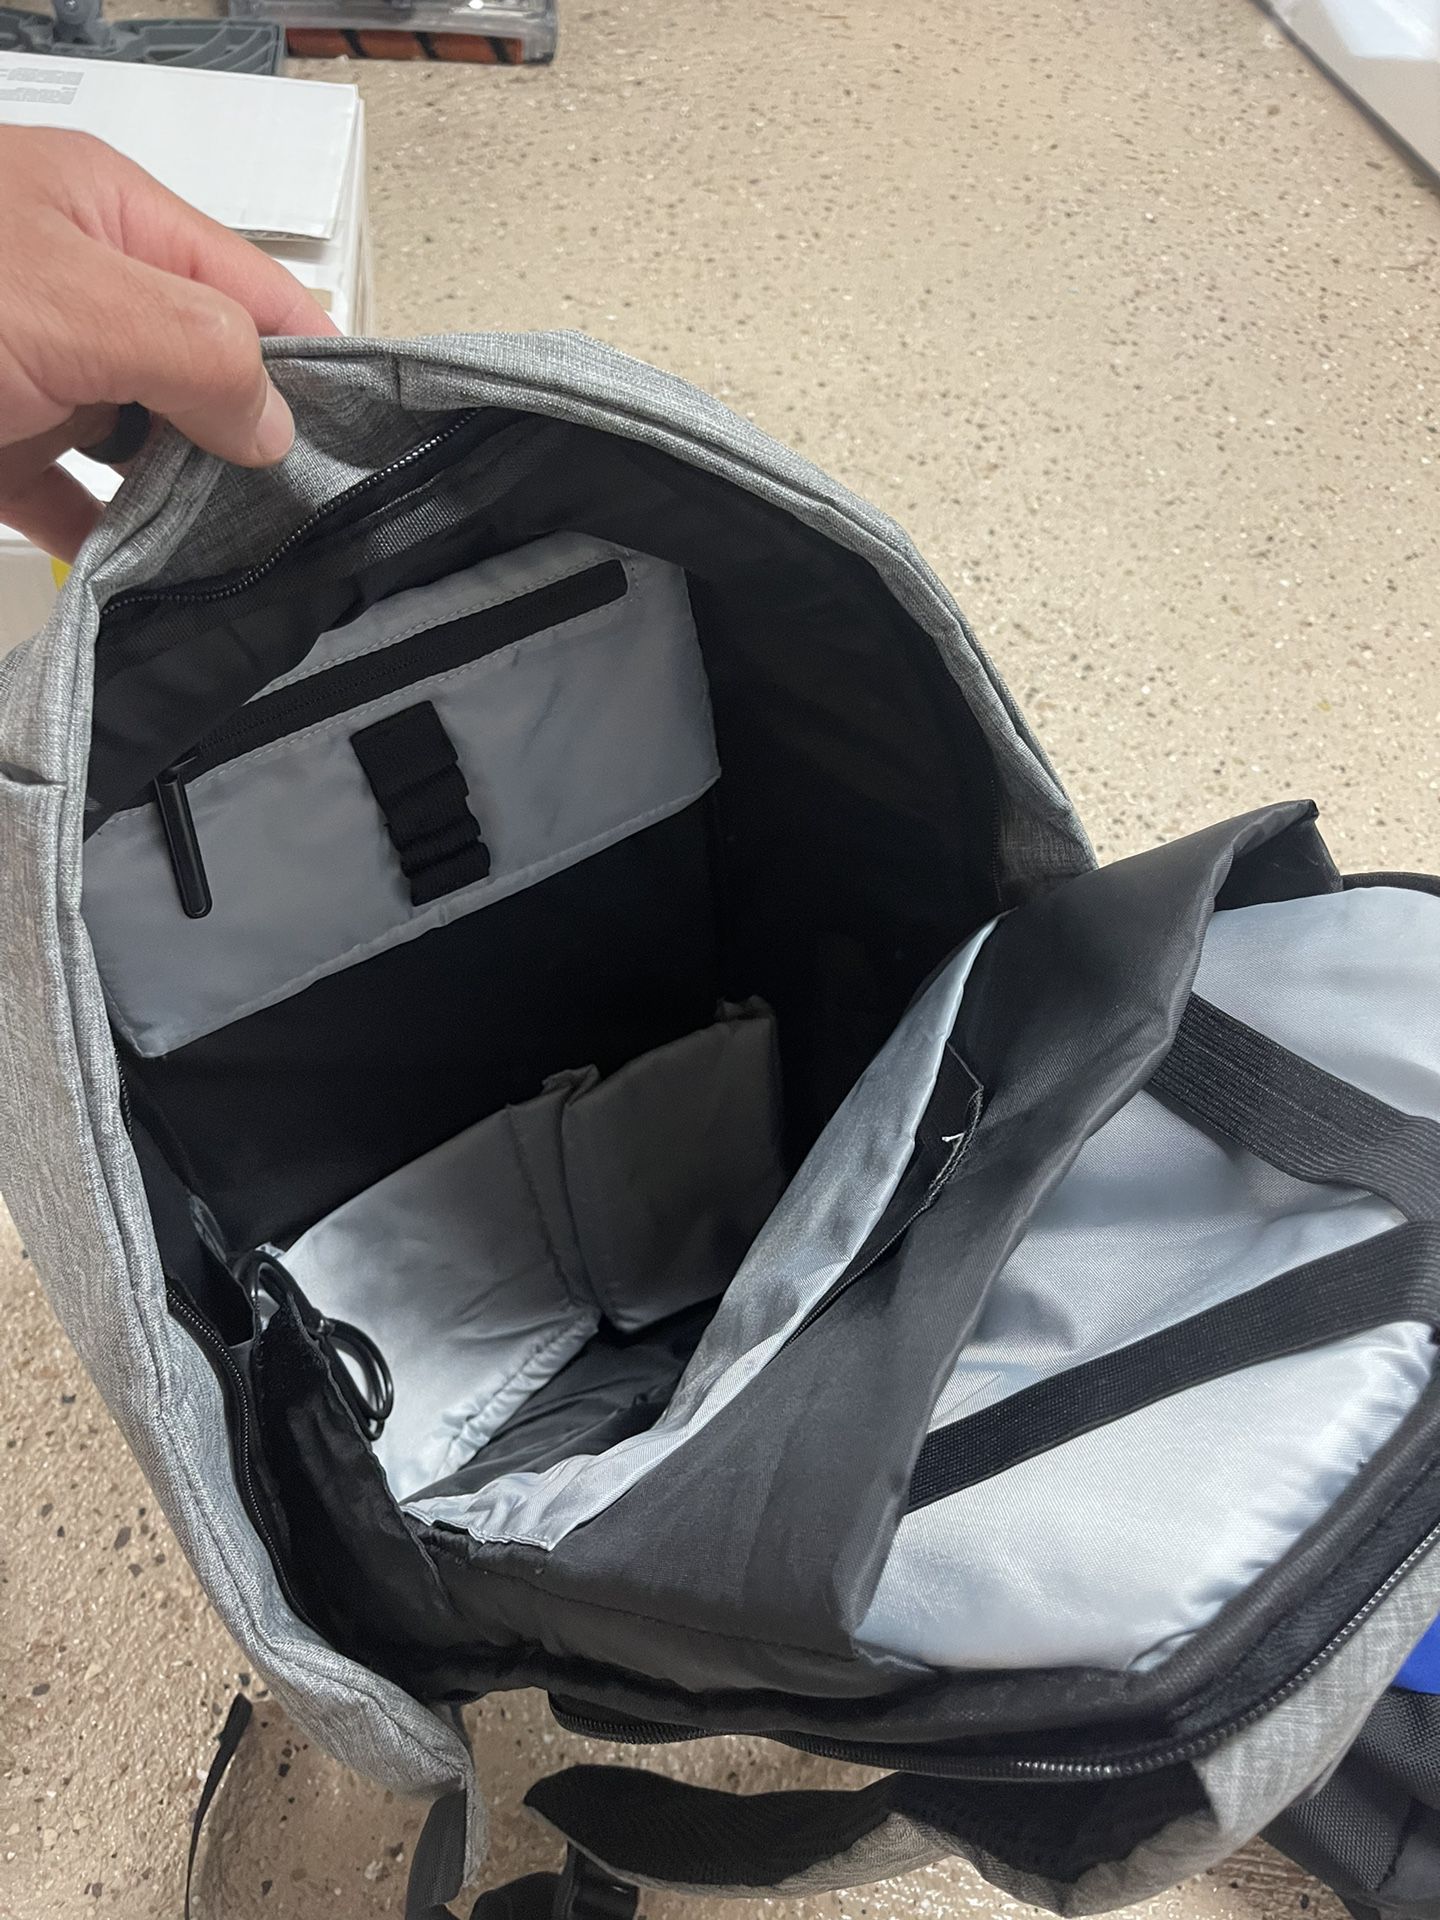 Laptop Backpack 